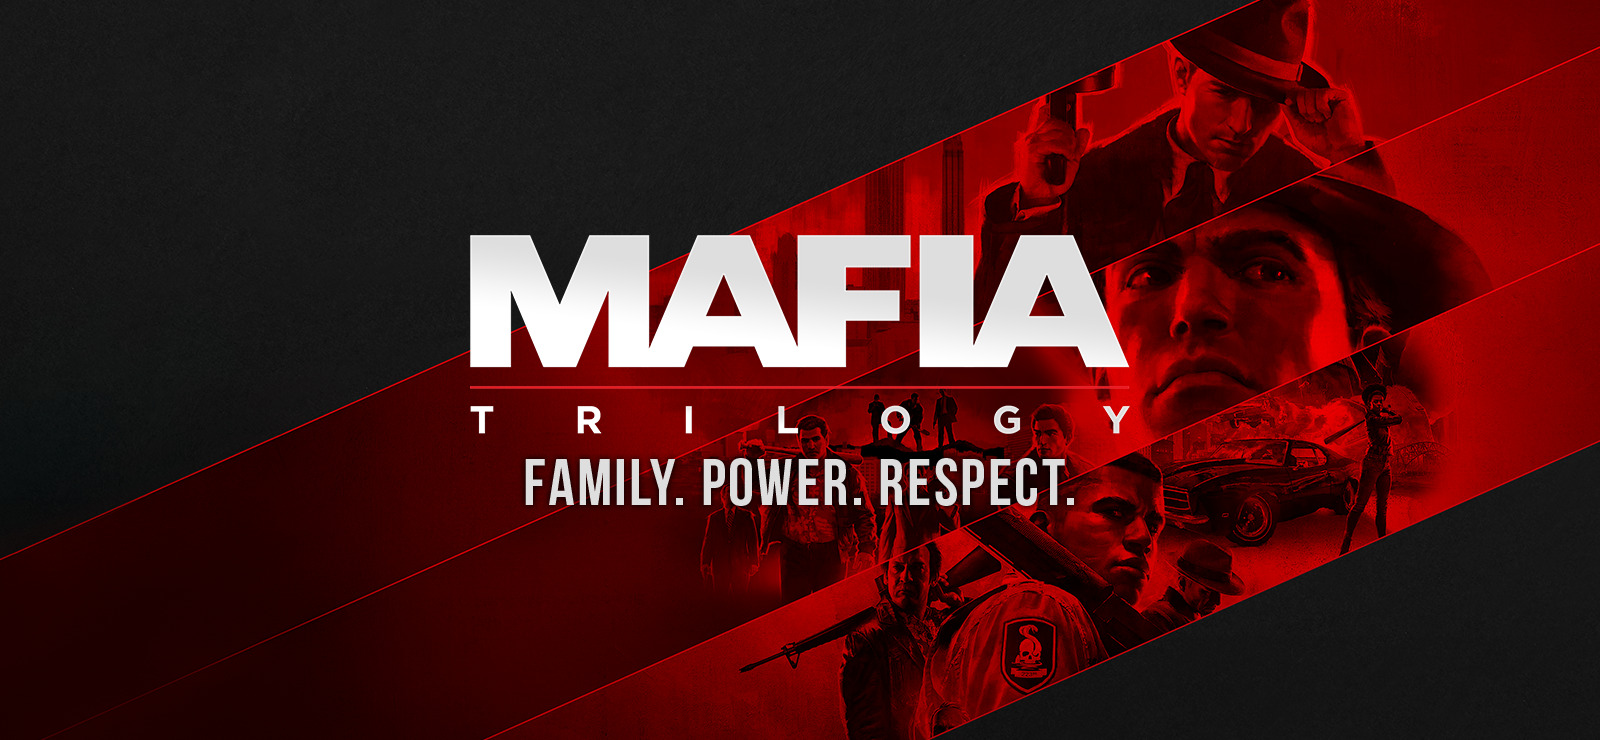 67% Mafia Trilogy on